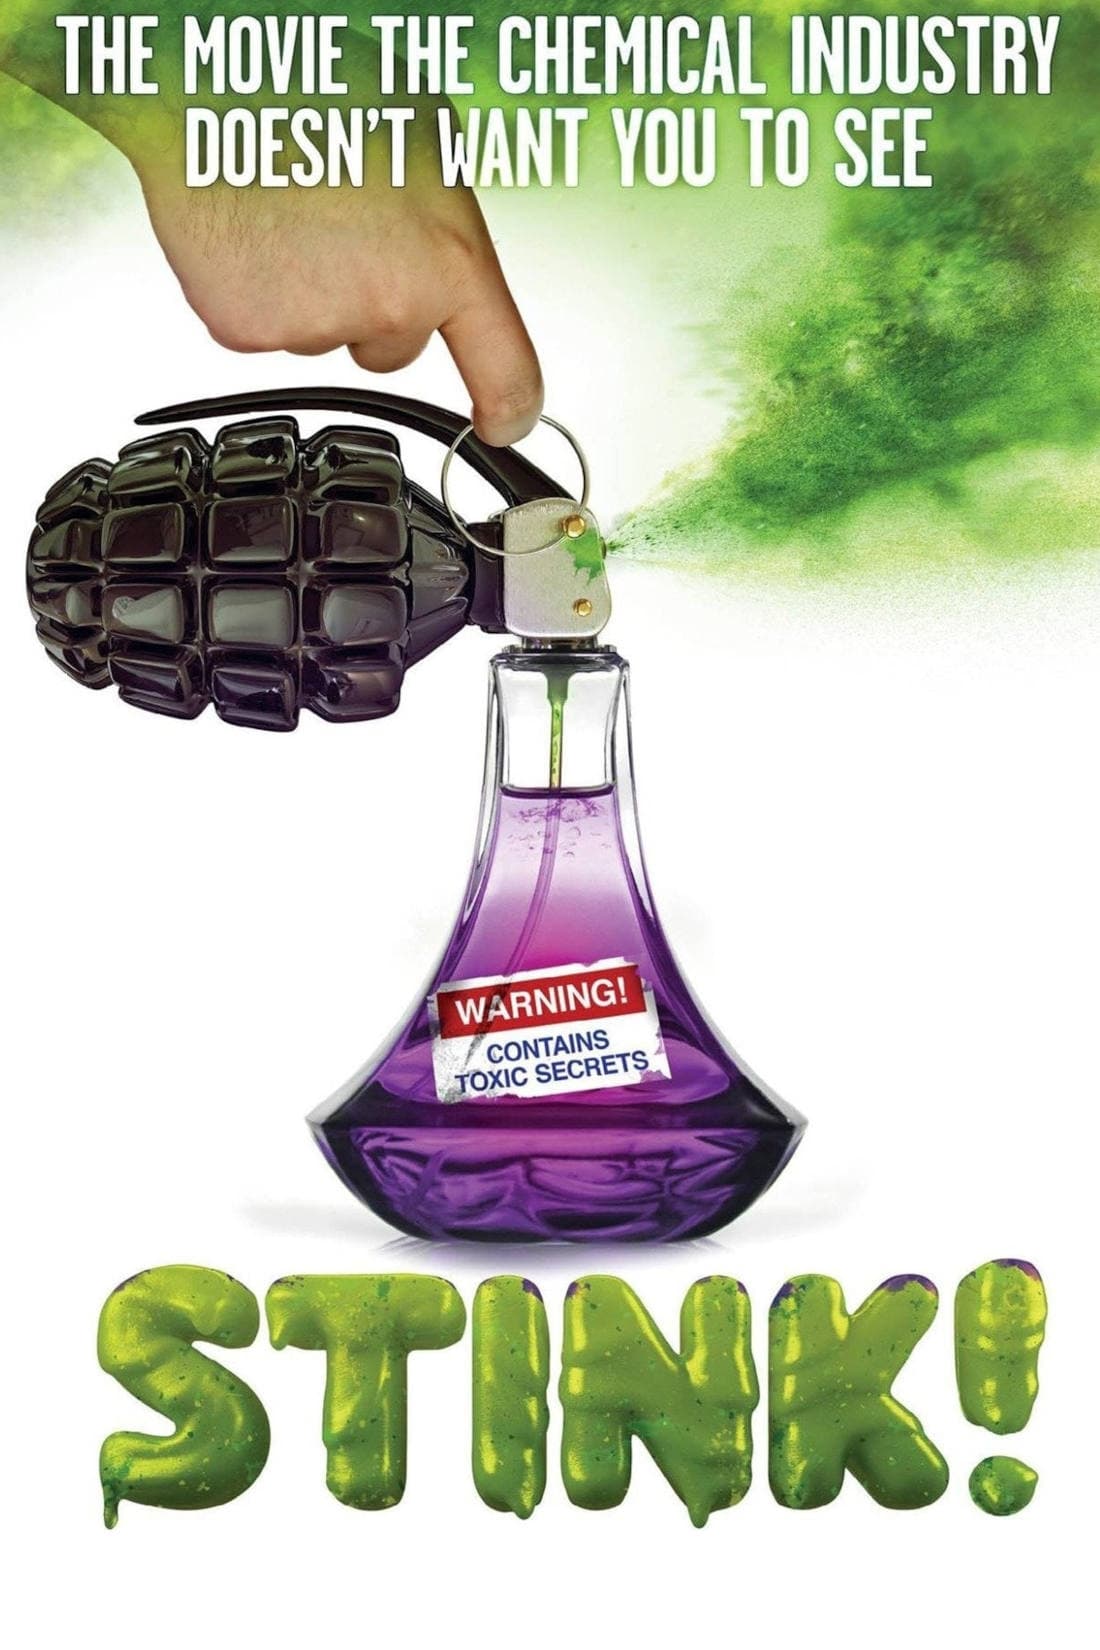 Stink!